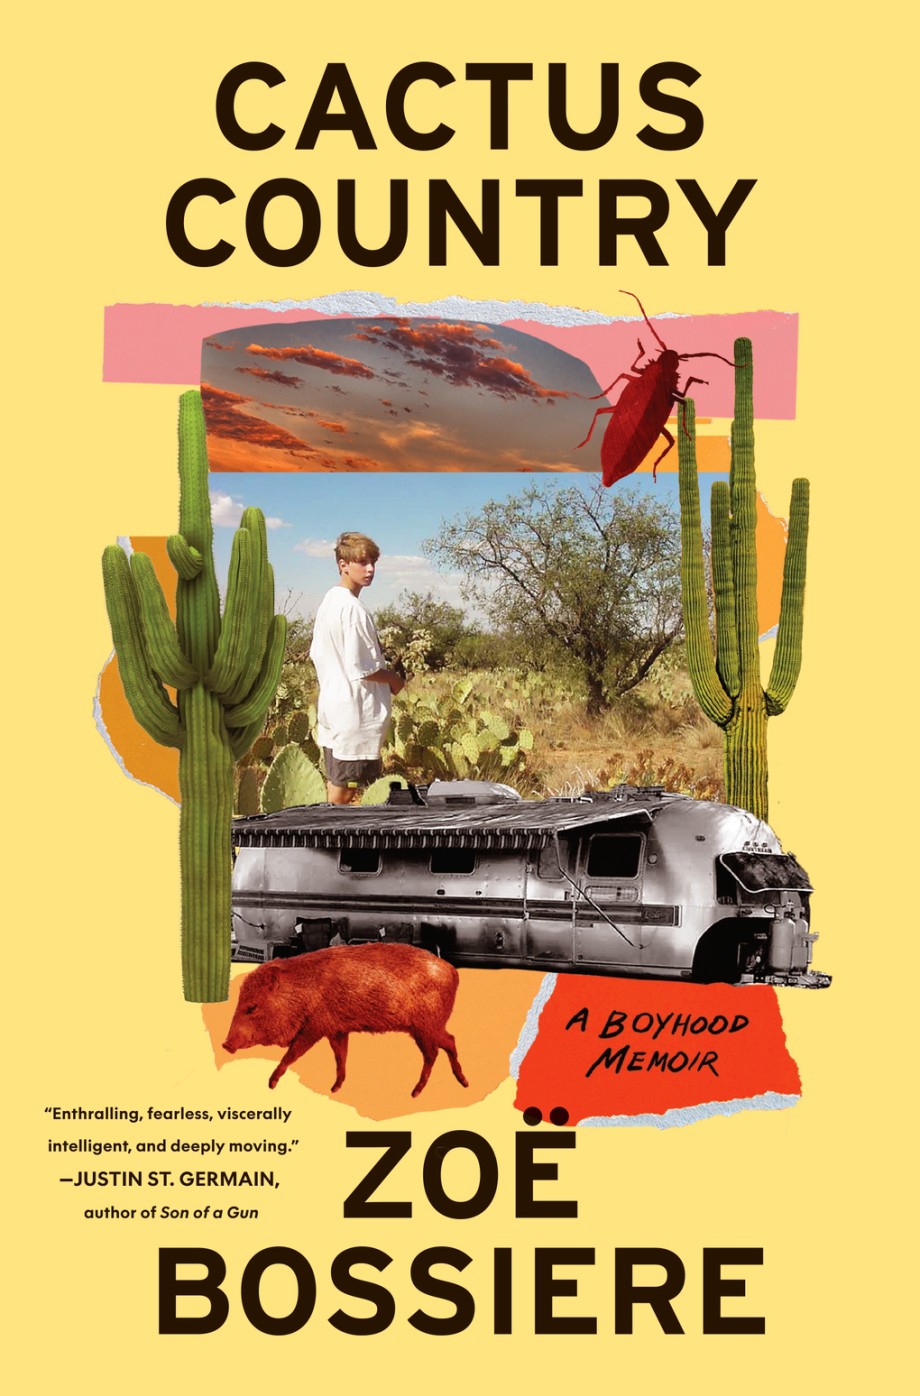 Cactus Country A Boyhood Memoir